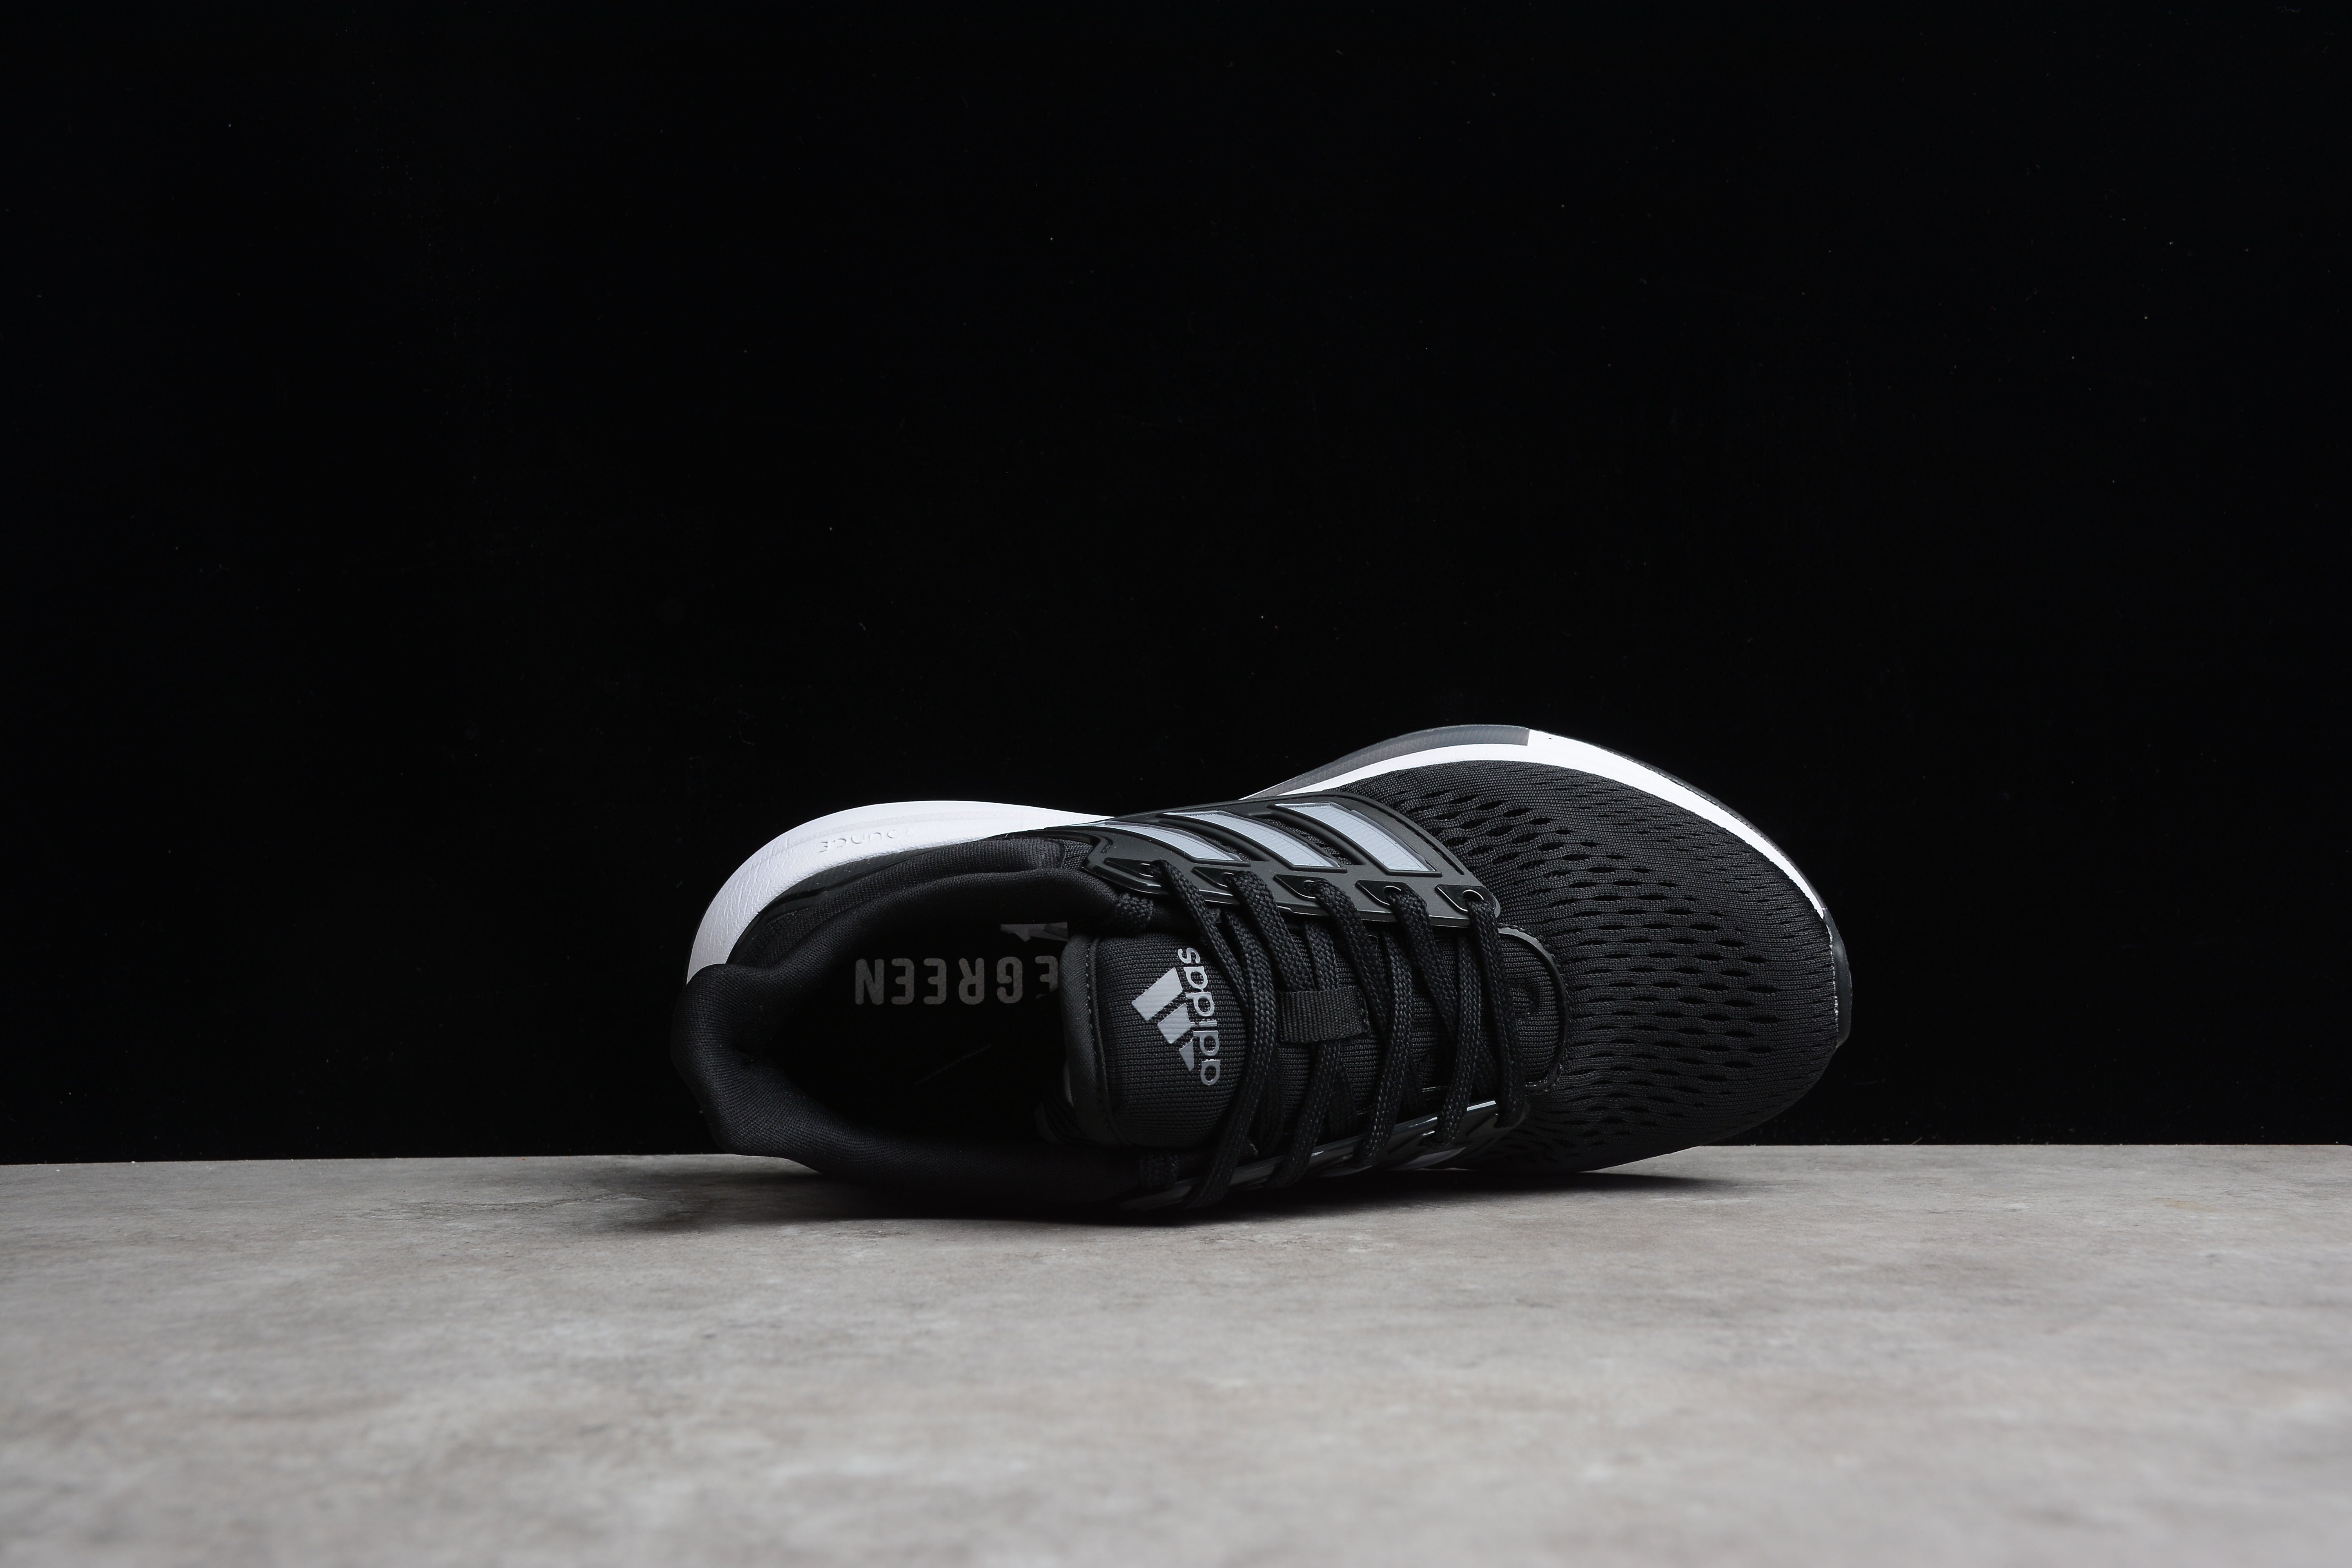 Adidas EQ21 RUN full black and white